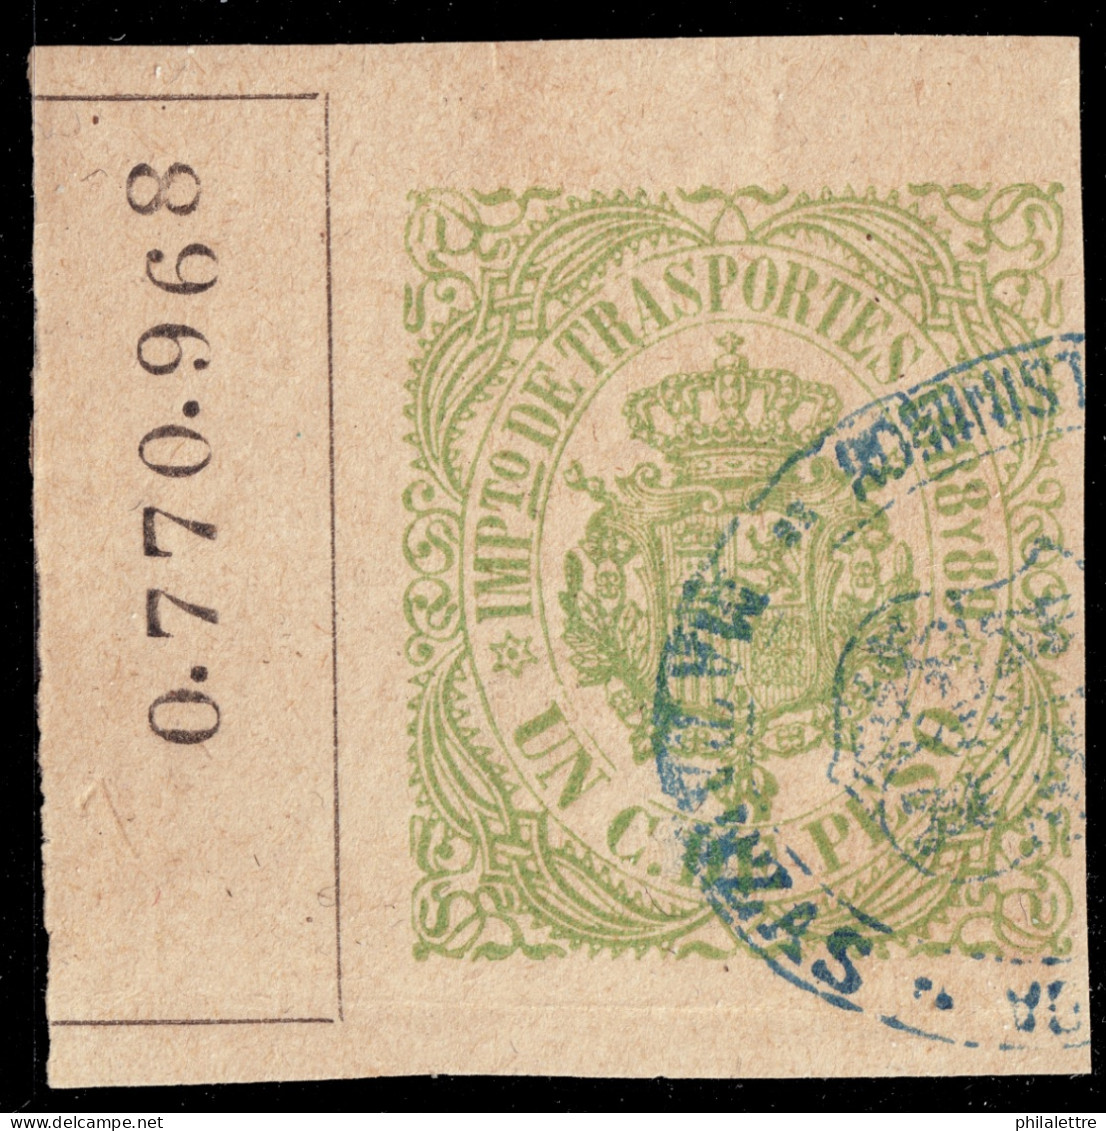 ESPAGNE / ESPANA - COLONIAS (Cuba) 1888/89 "IMPto De TRASPORTES" 1c Verde Esmeralda - Usado (0.770.968) - Kuba (1874-1898)